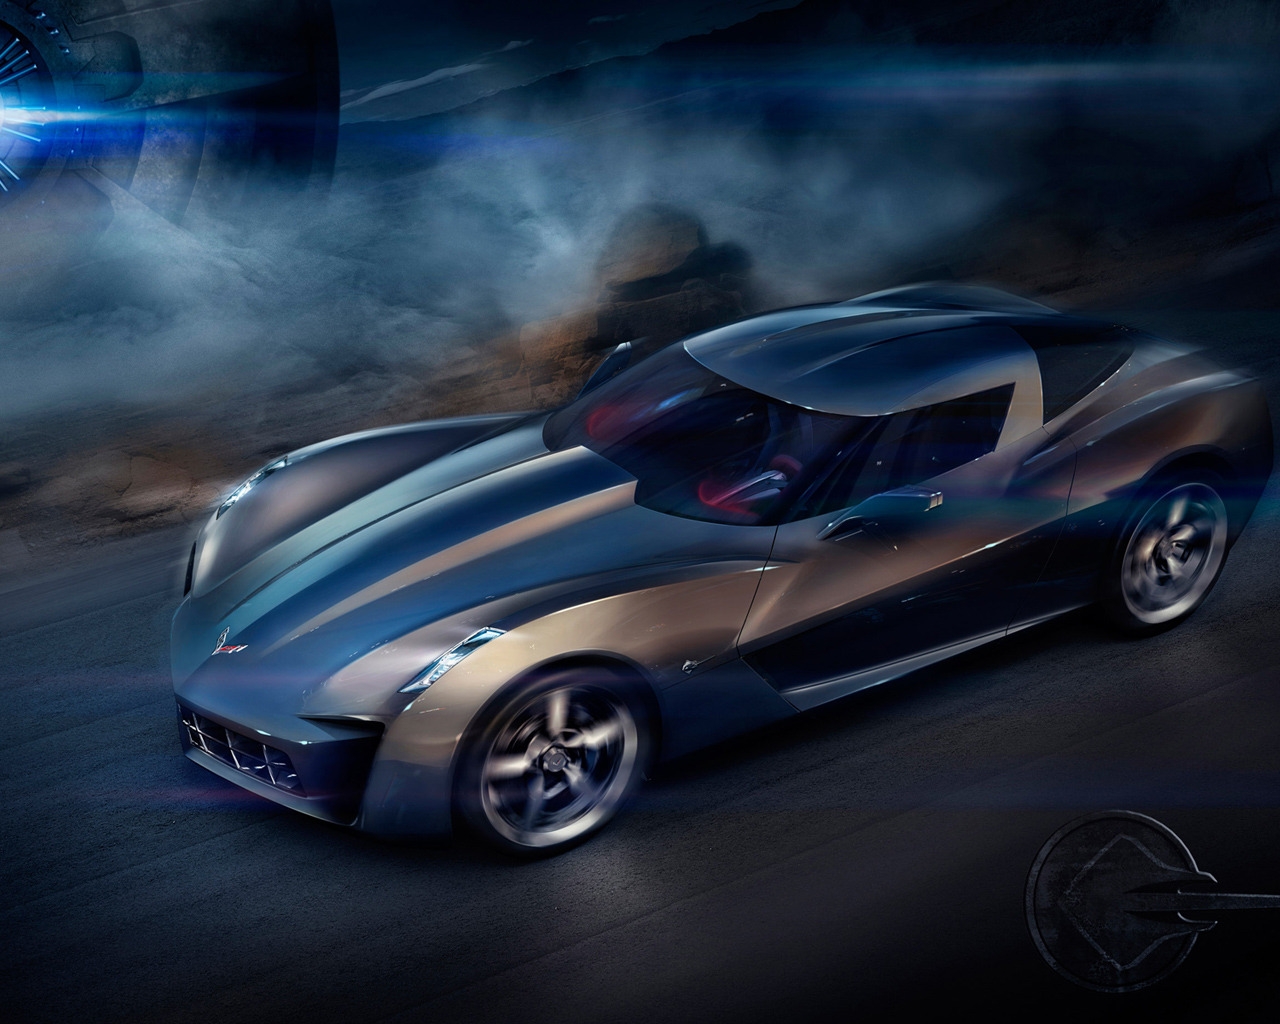 Corvette Stingray for 1280 x 1024 resolution